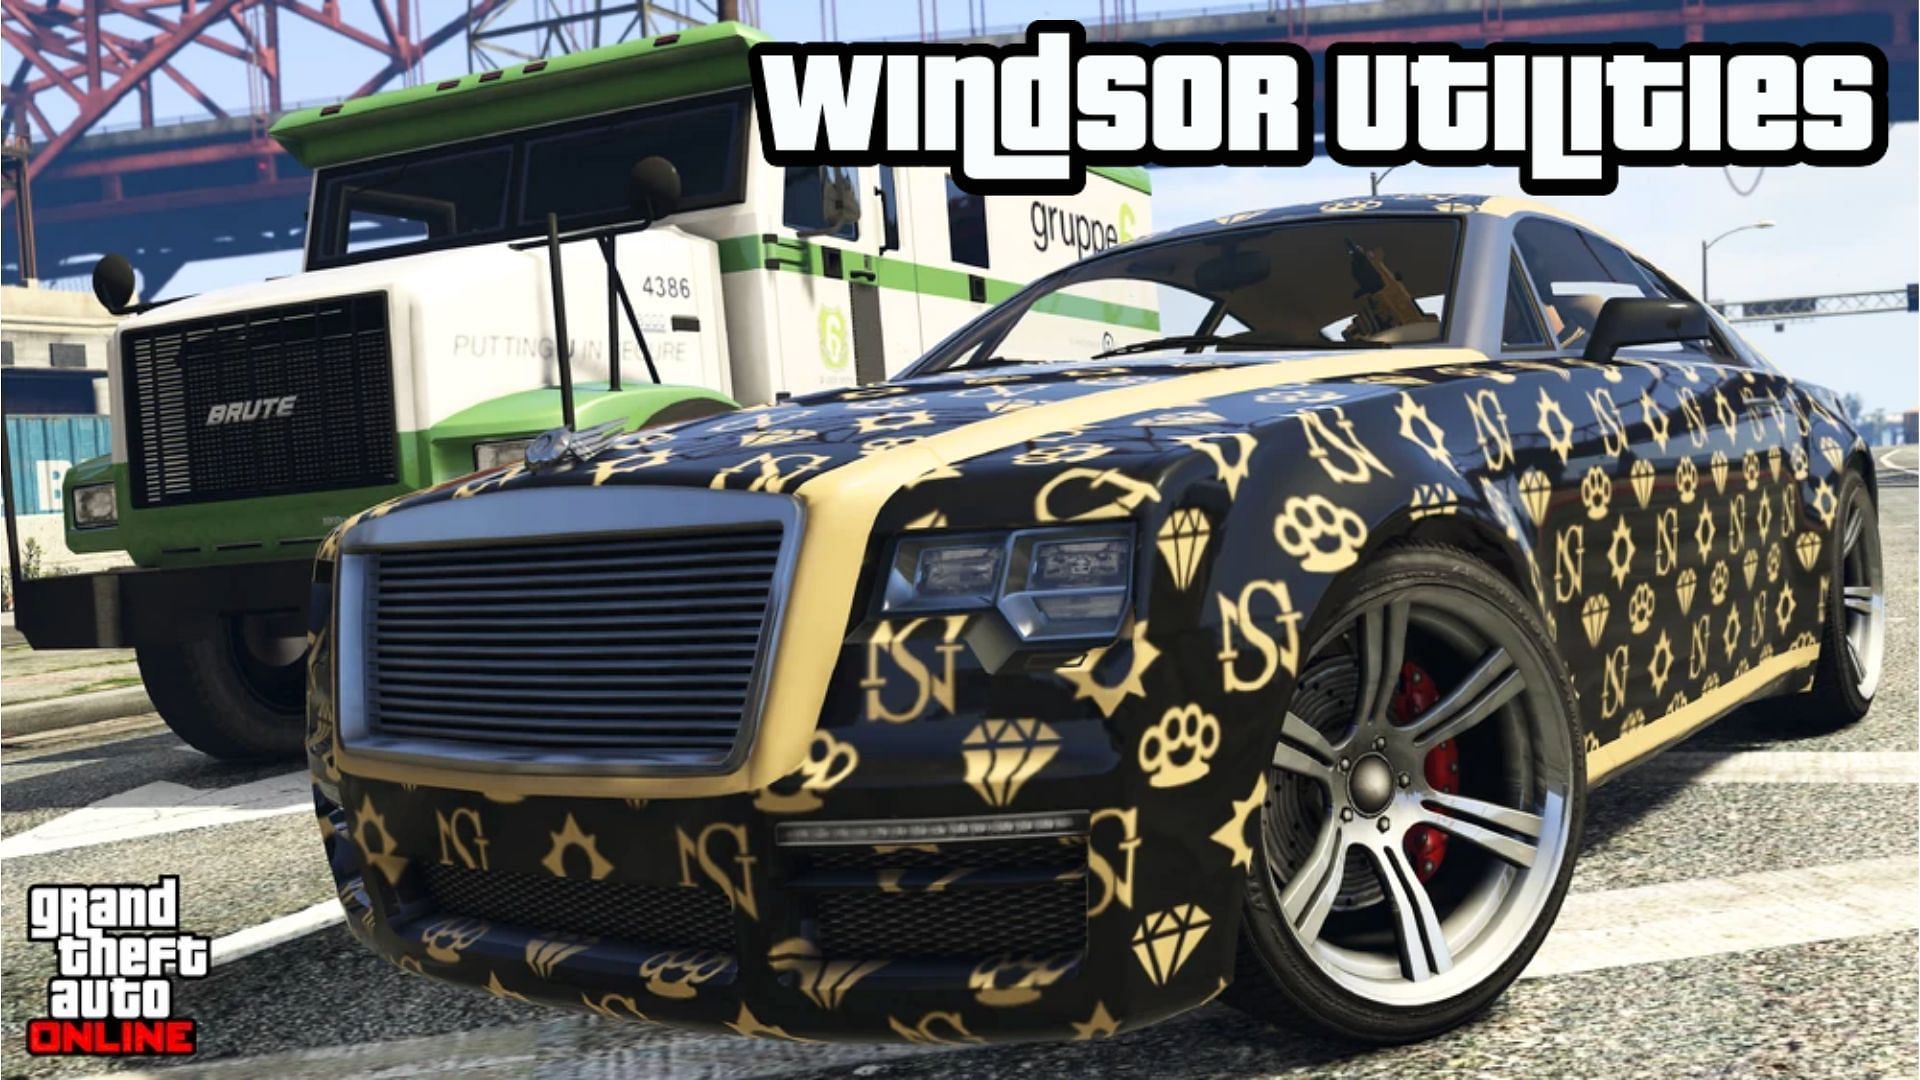 5 reasons to own Windsor in GTA Online in 2023